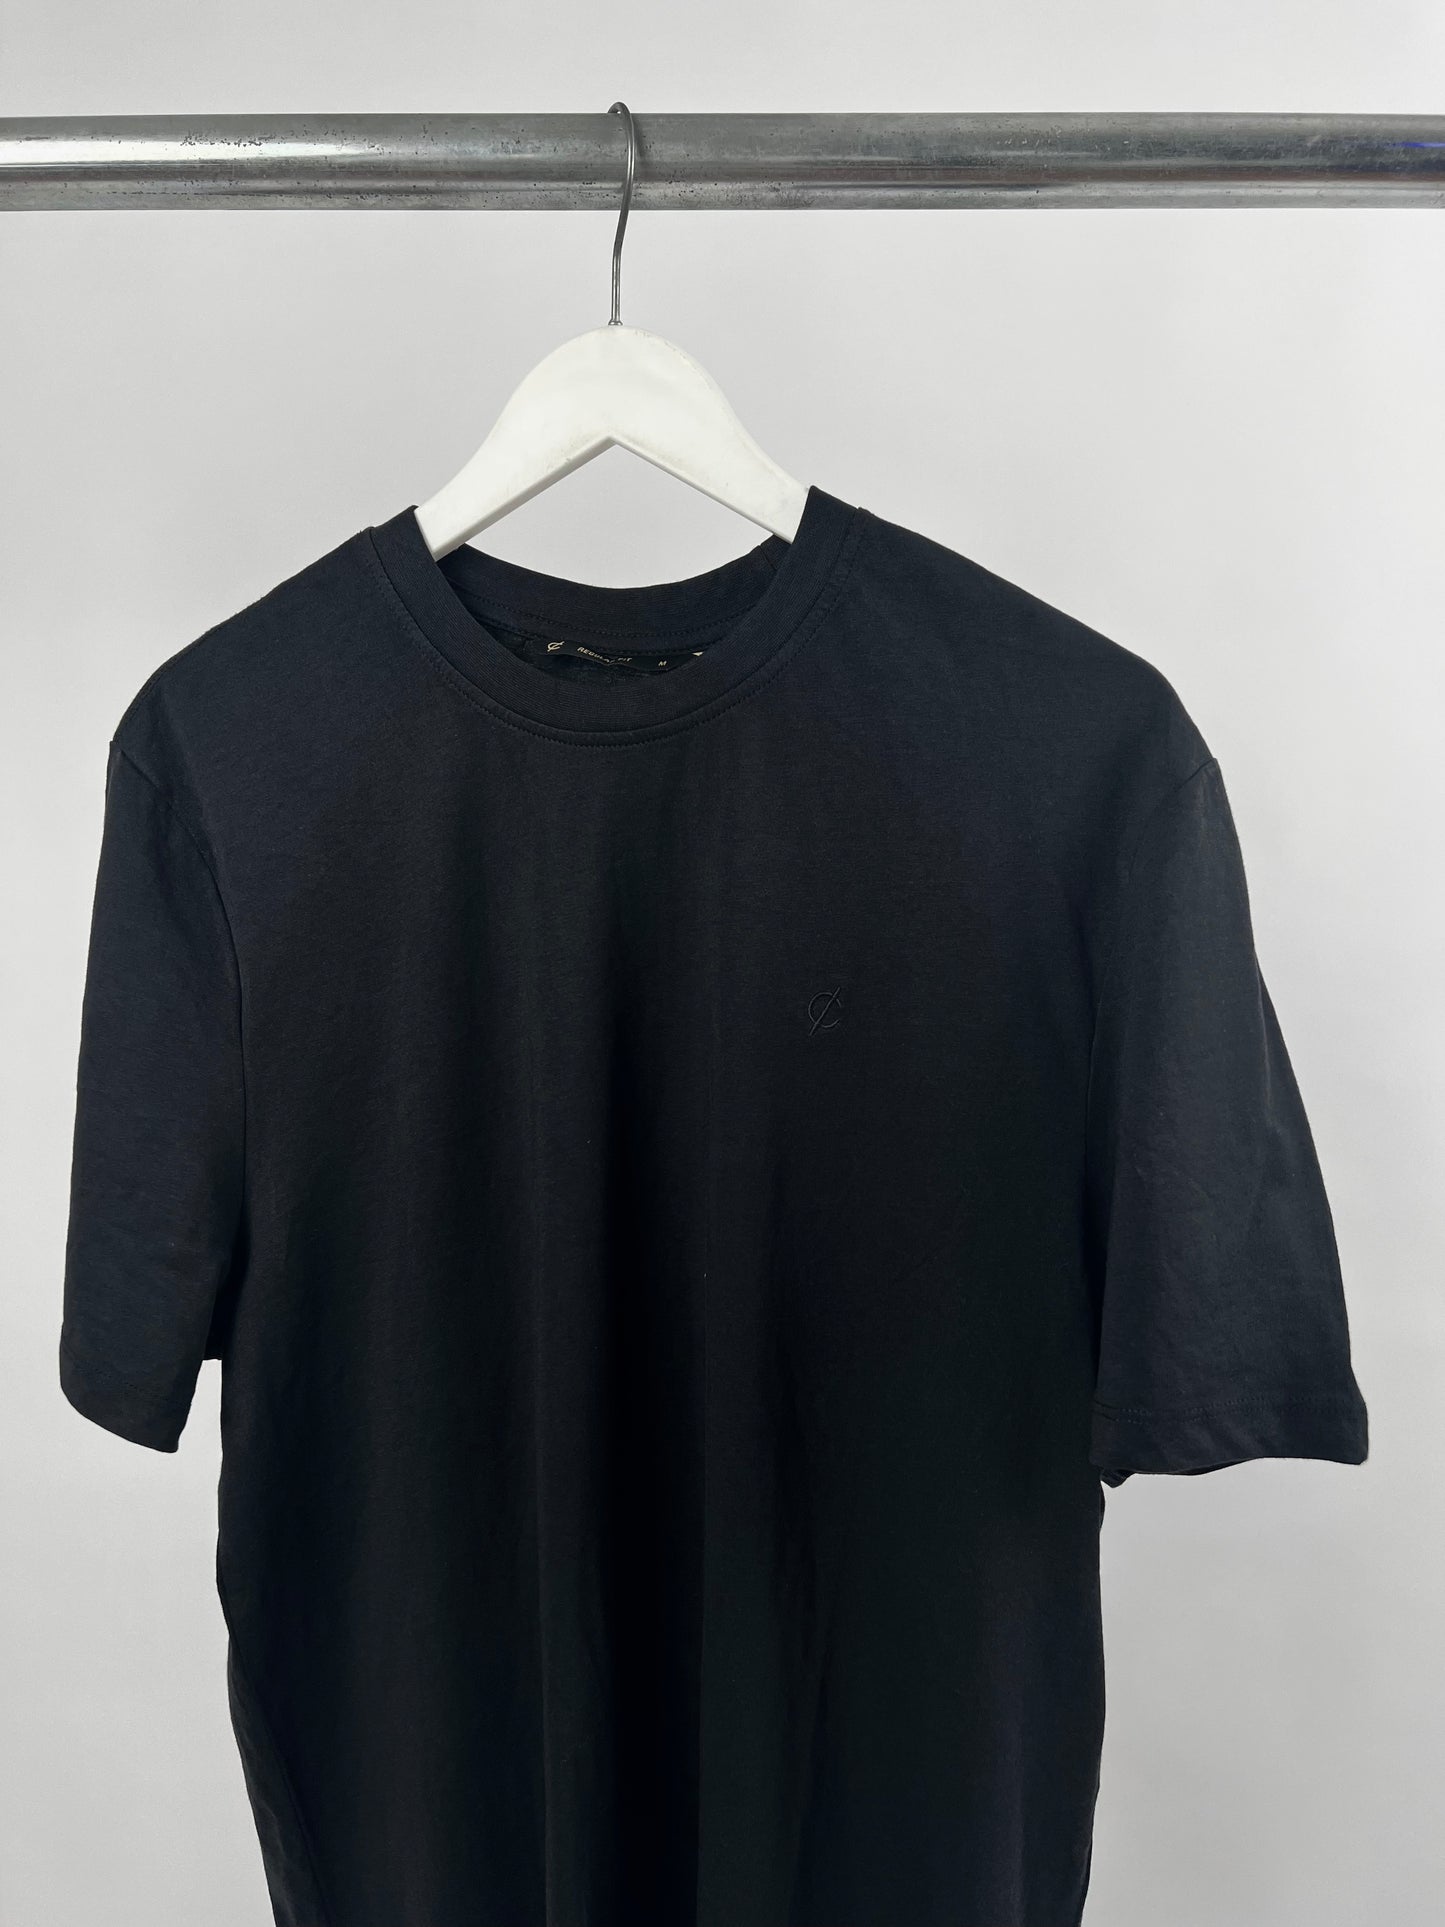 CMNS regular fit t-shirt in black